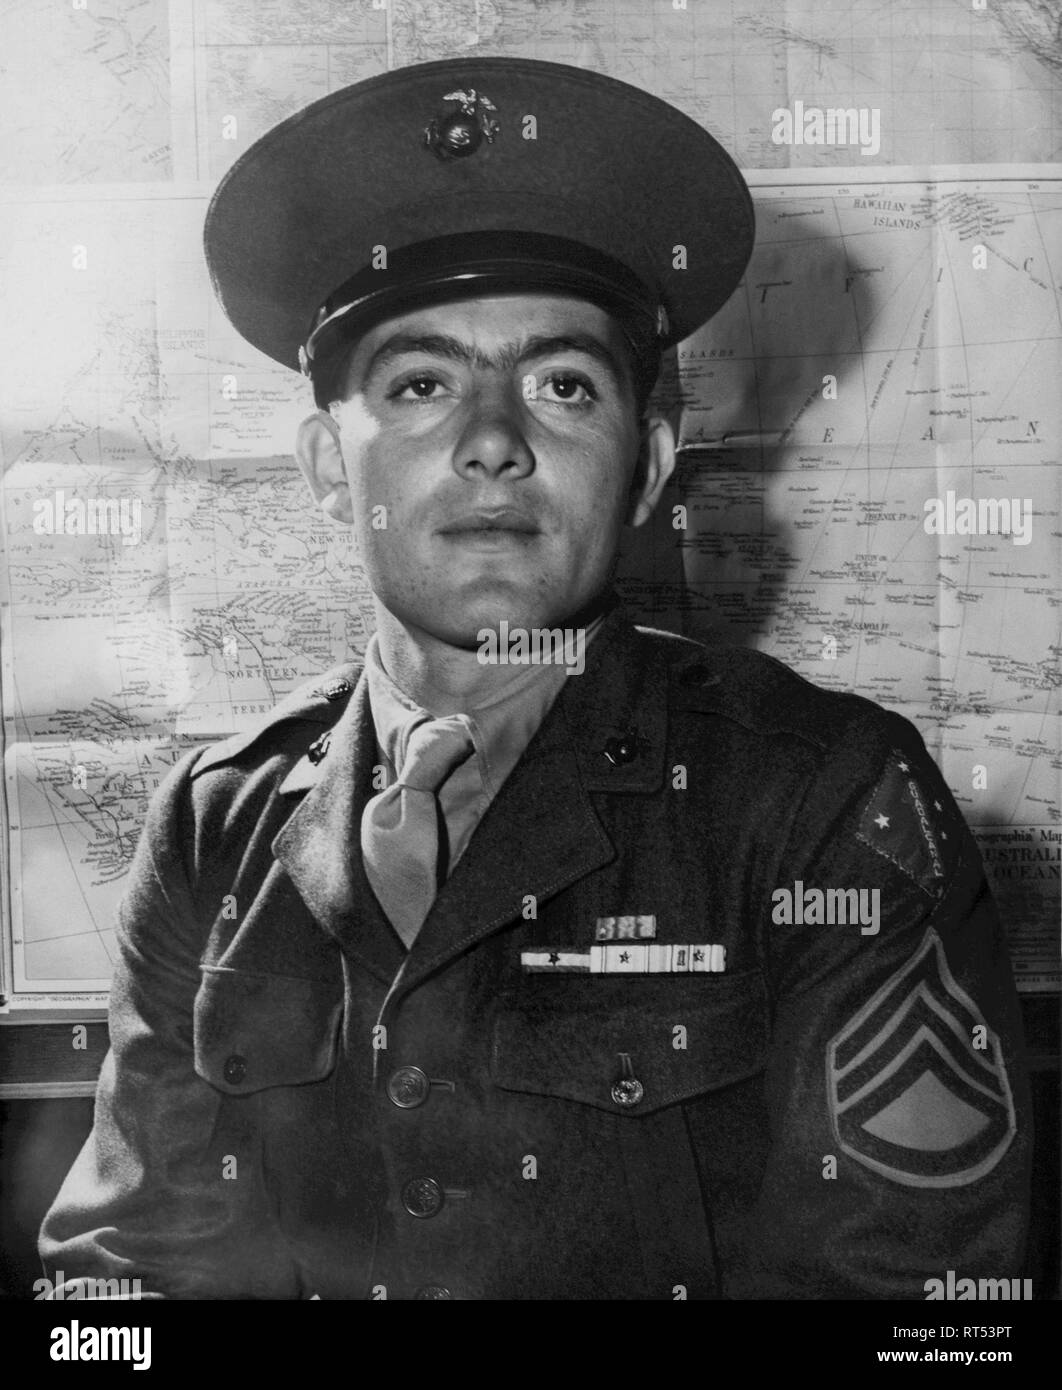 World War II photograph of Sergeant John Basilone, September 1943. Stock Photo